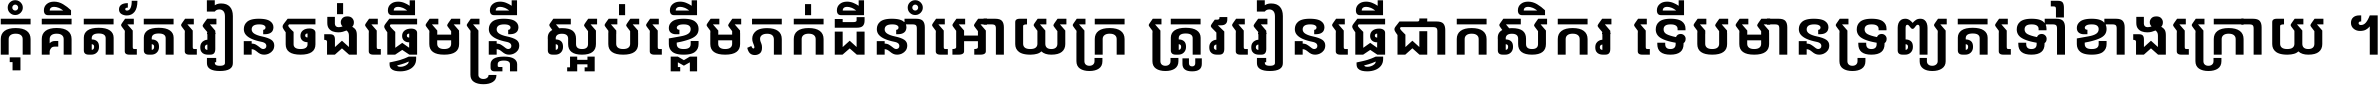 Noto Sans Khmer UI SemiCondensed SemiBold